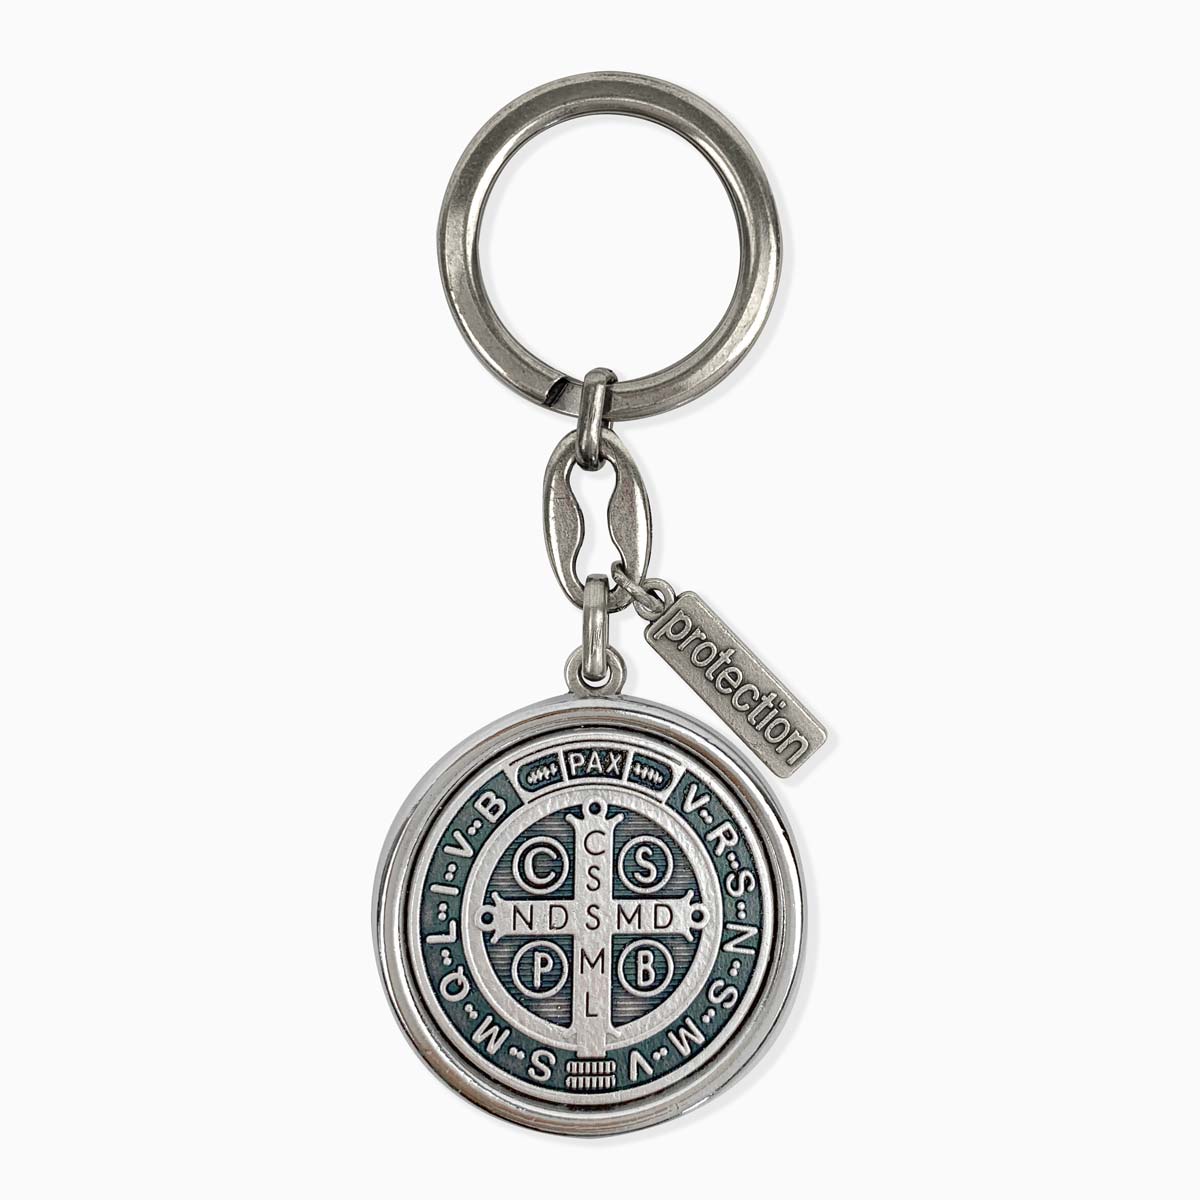 St. Benedict Key Ring by My Saint My Hero